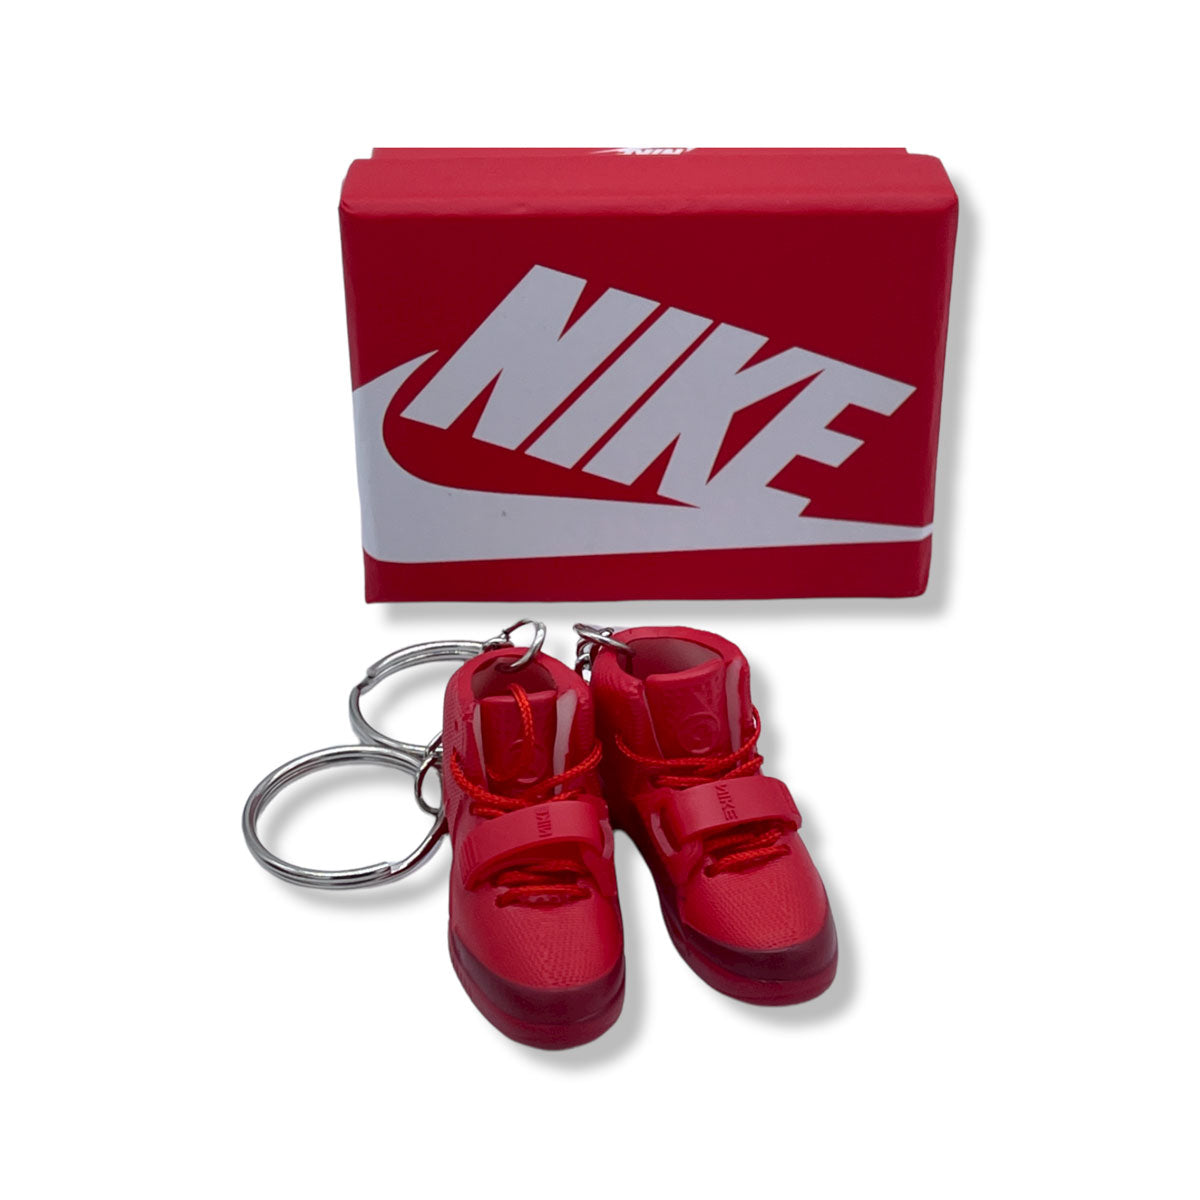 3D Sneaker Keychain- Nike Air Yeezy 2 Red October Pair